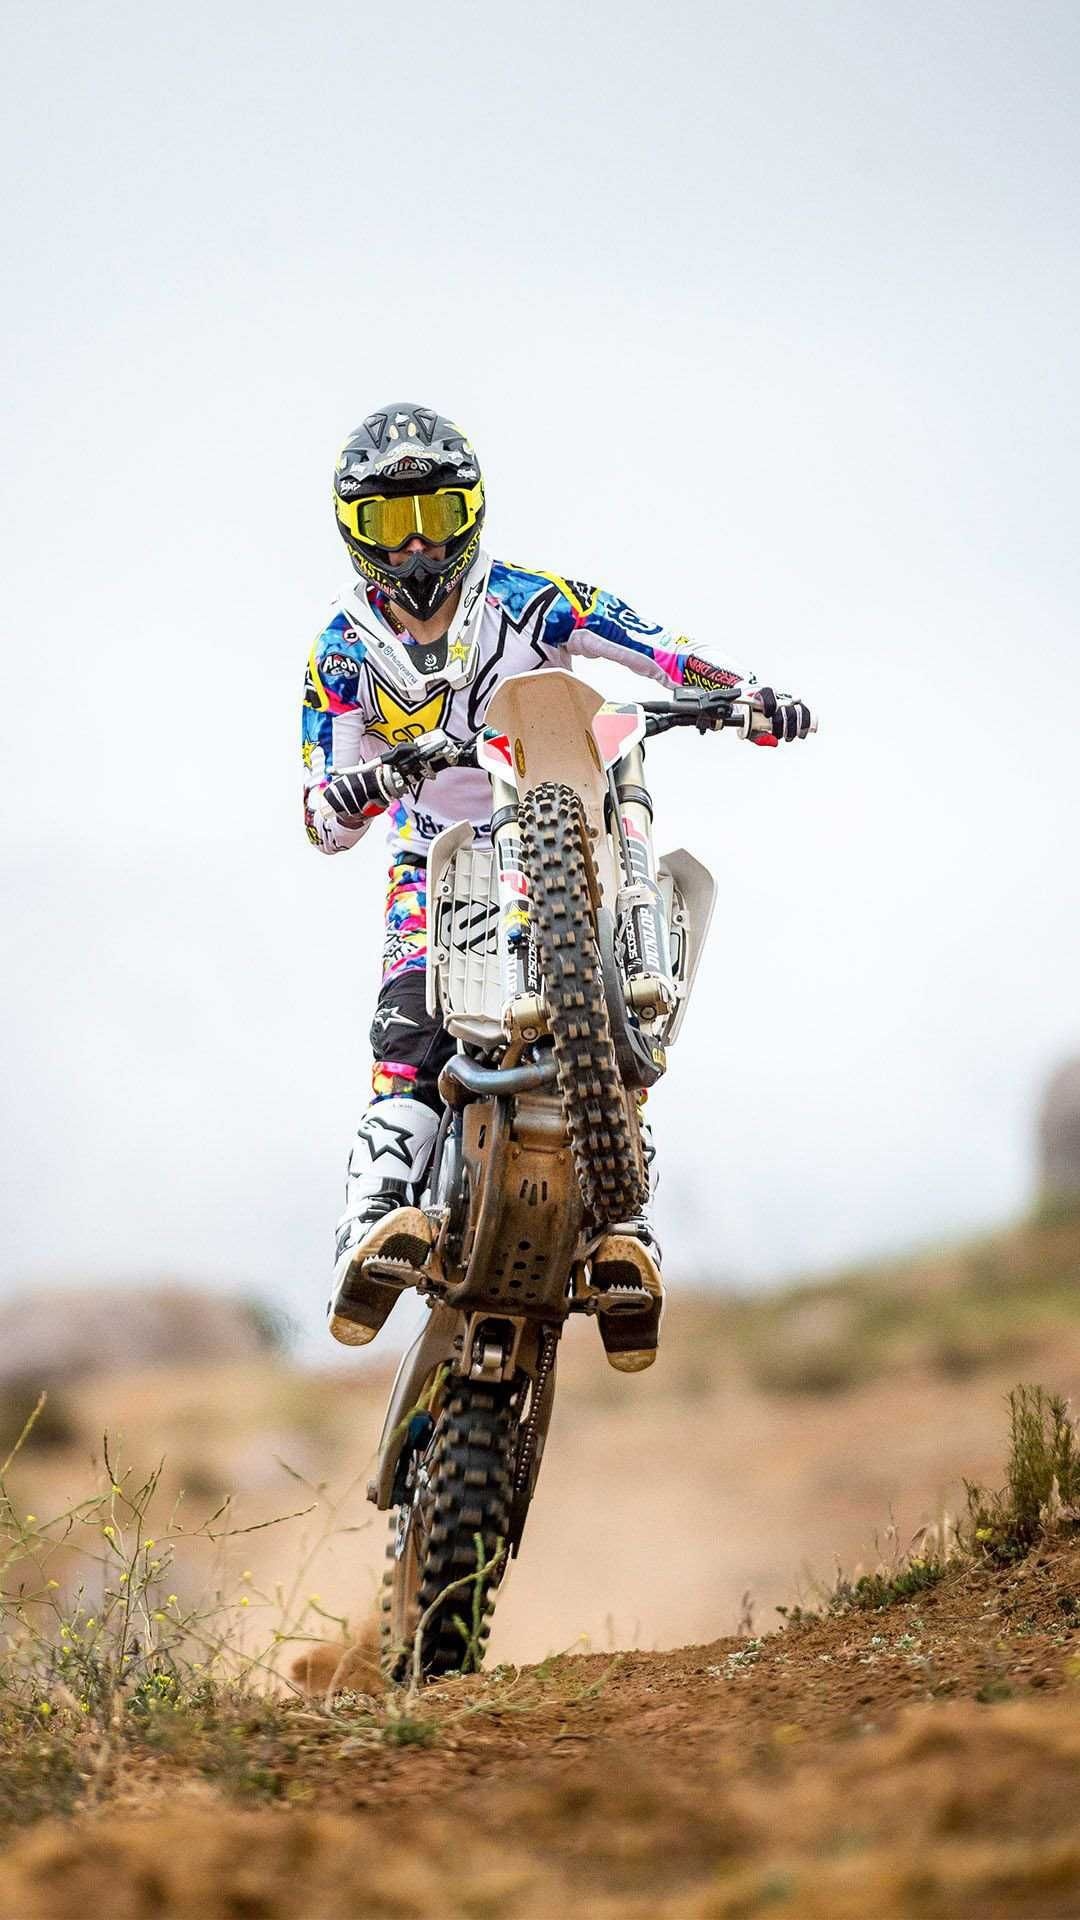 Motocross: Wheelie Stunt By Professional Racer, Dirt Bike, AMA Scholarship Races. 1080x1920 Full HD Background.